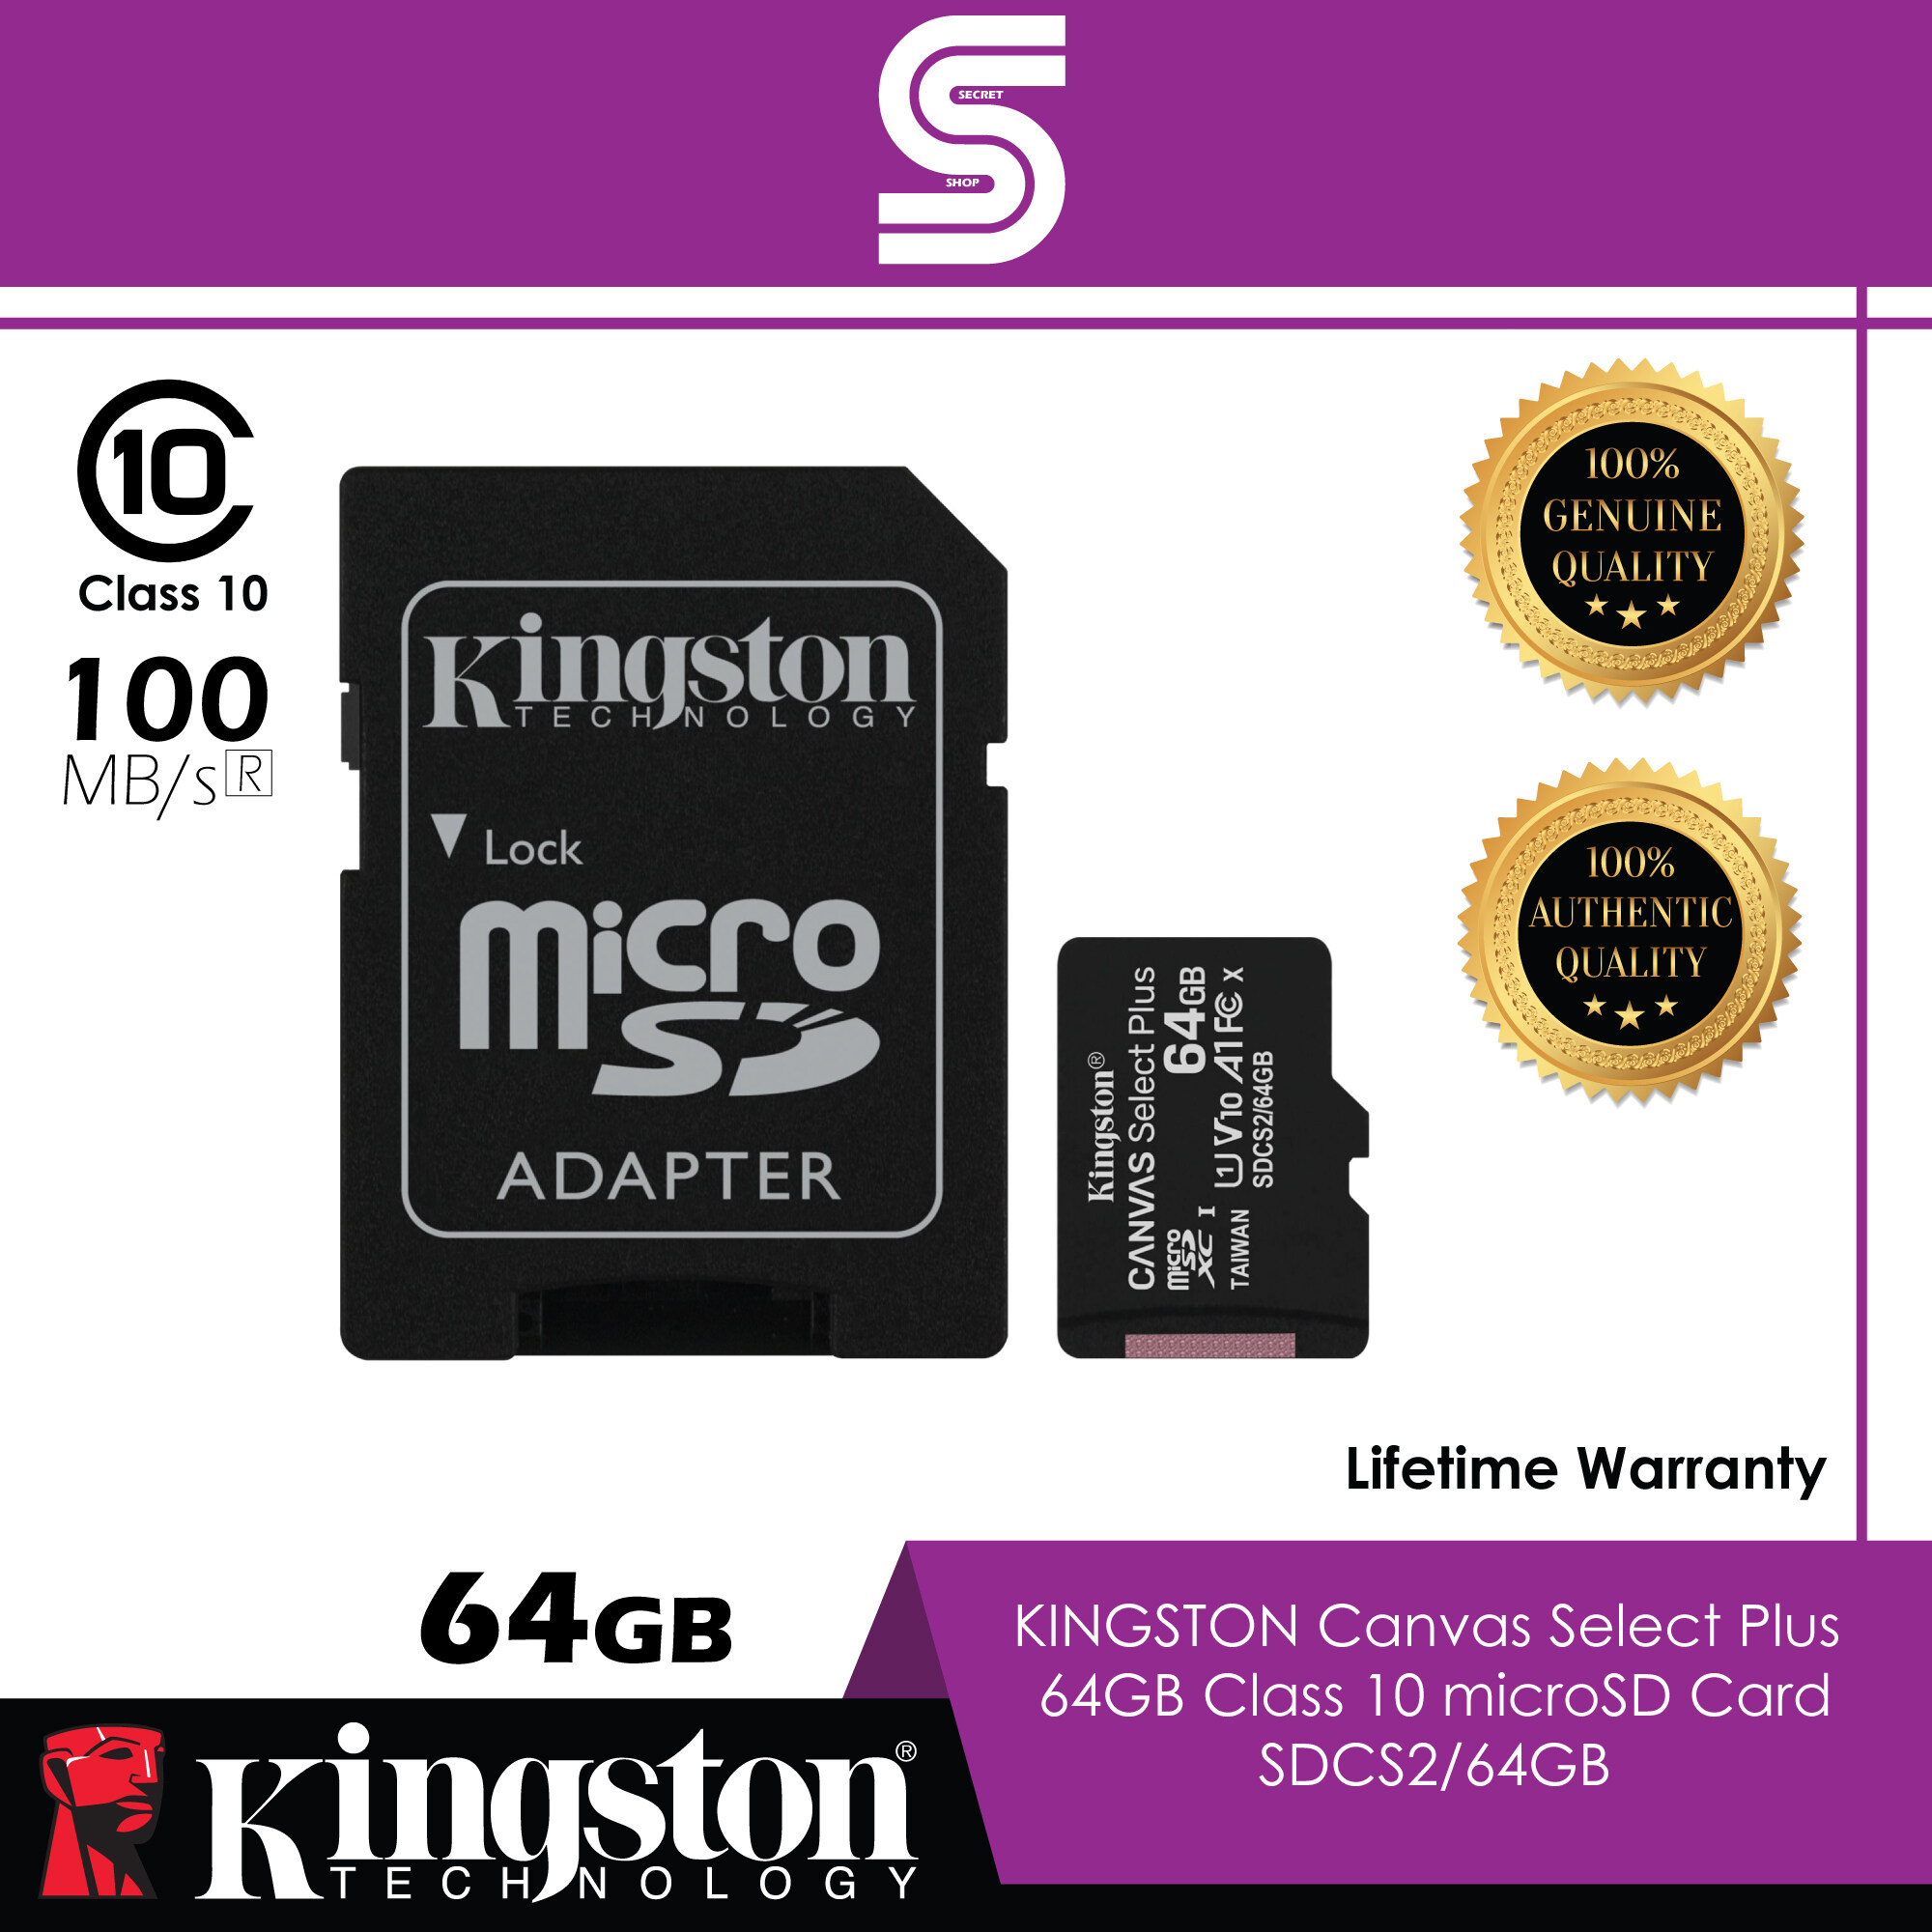 Kingston Canvas Select Plus 64GB Class 10 microSD Card - SDCS2/64GB